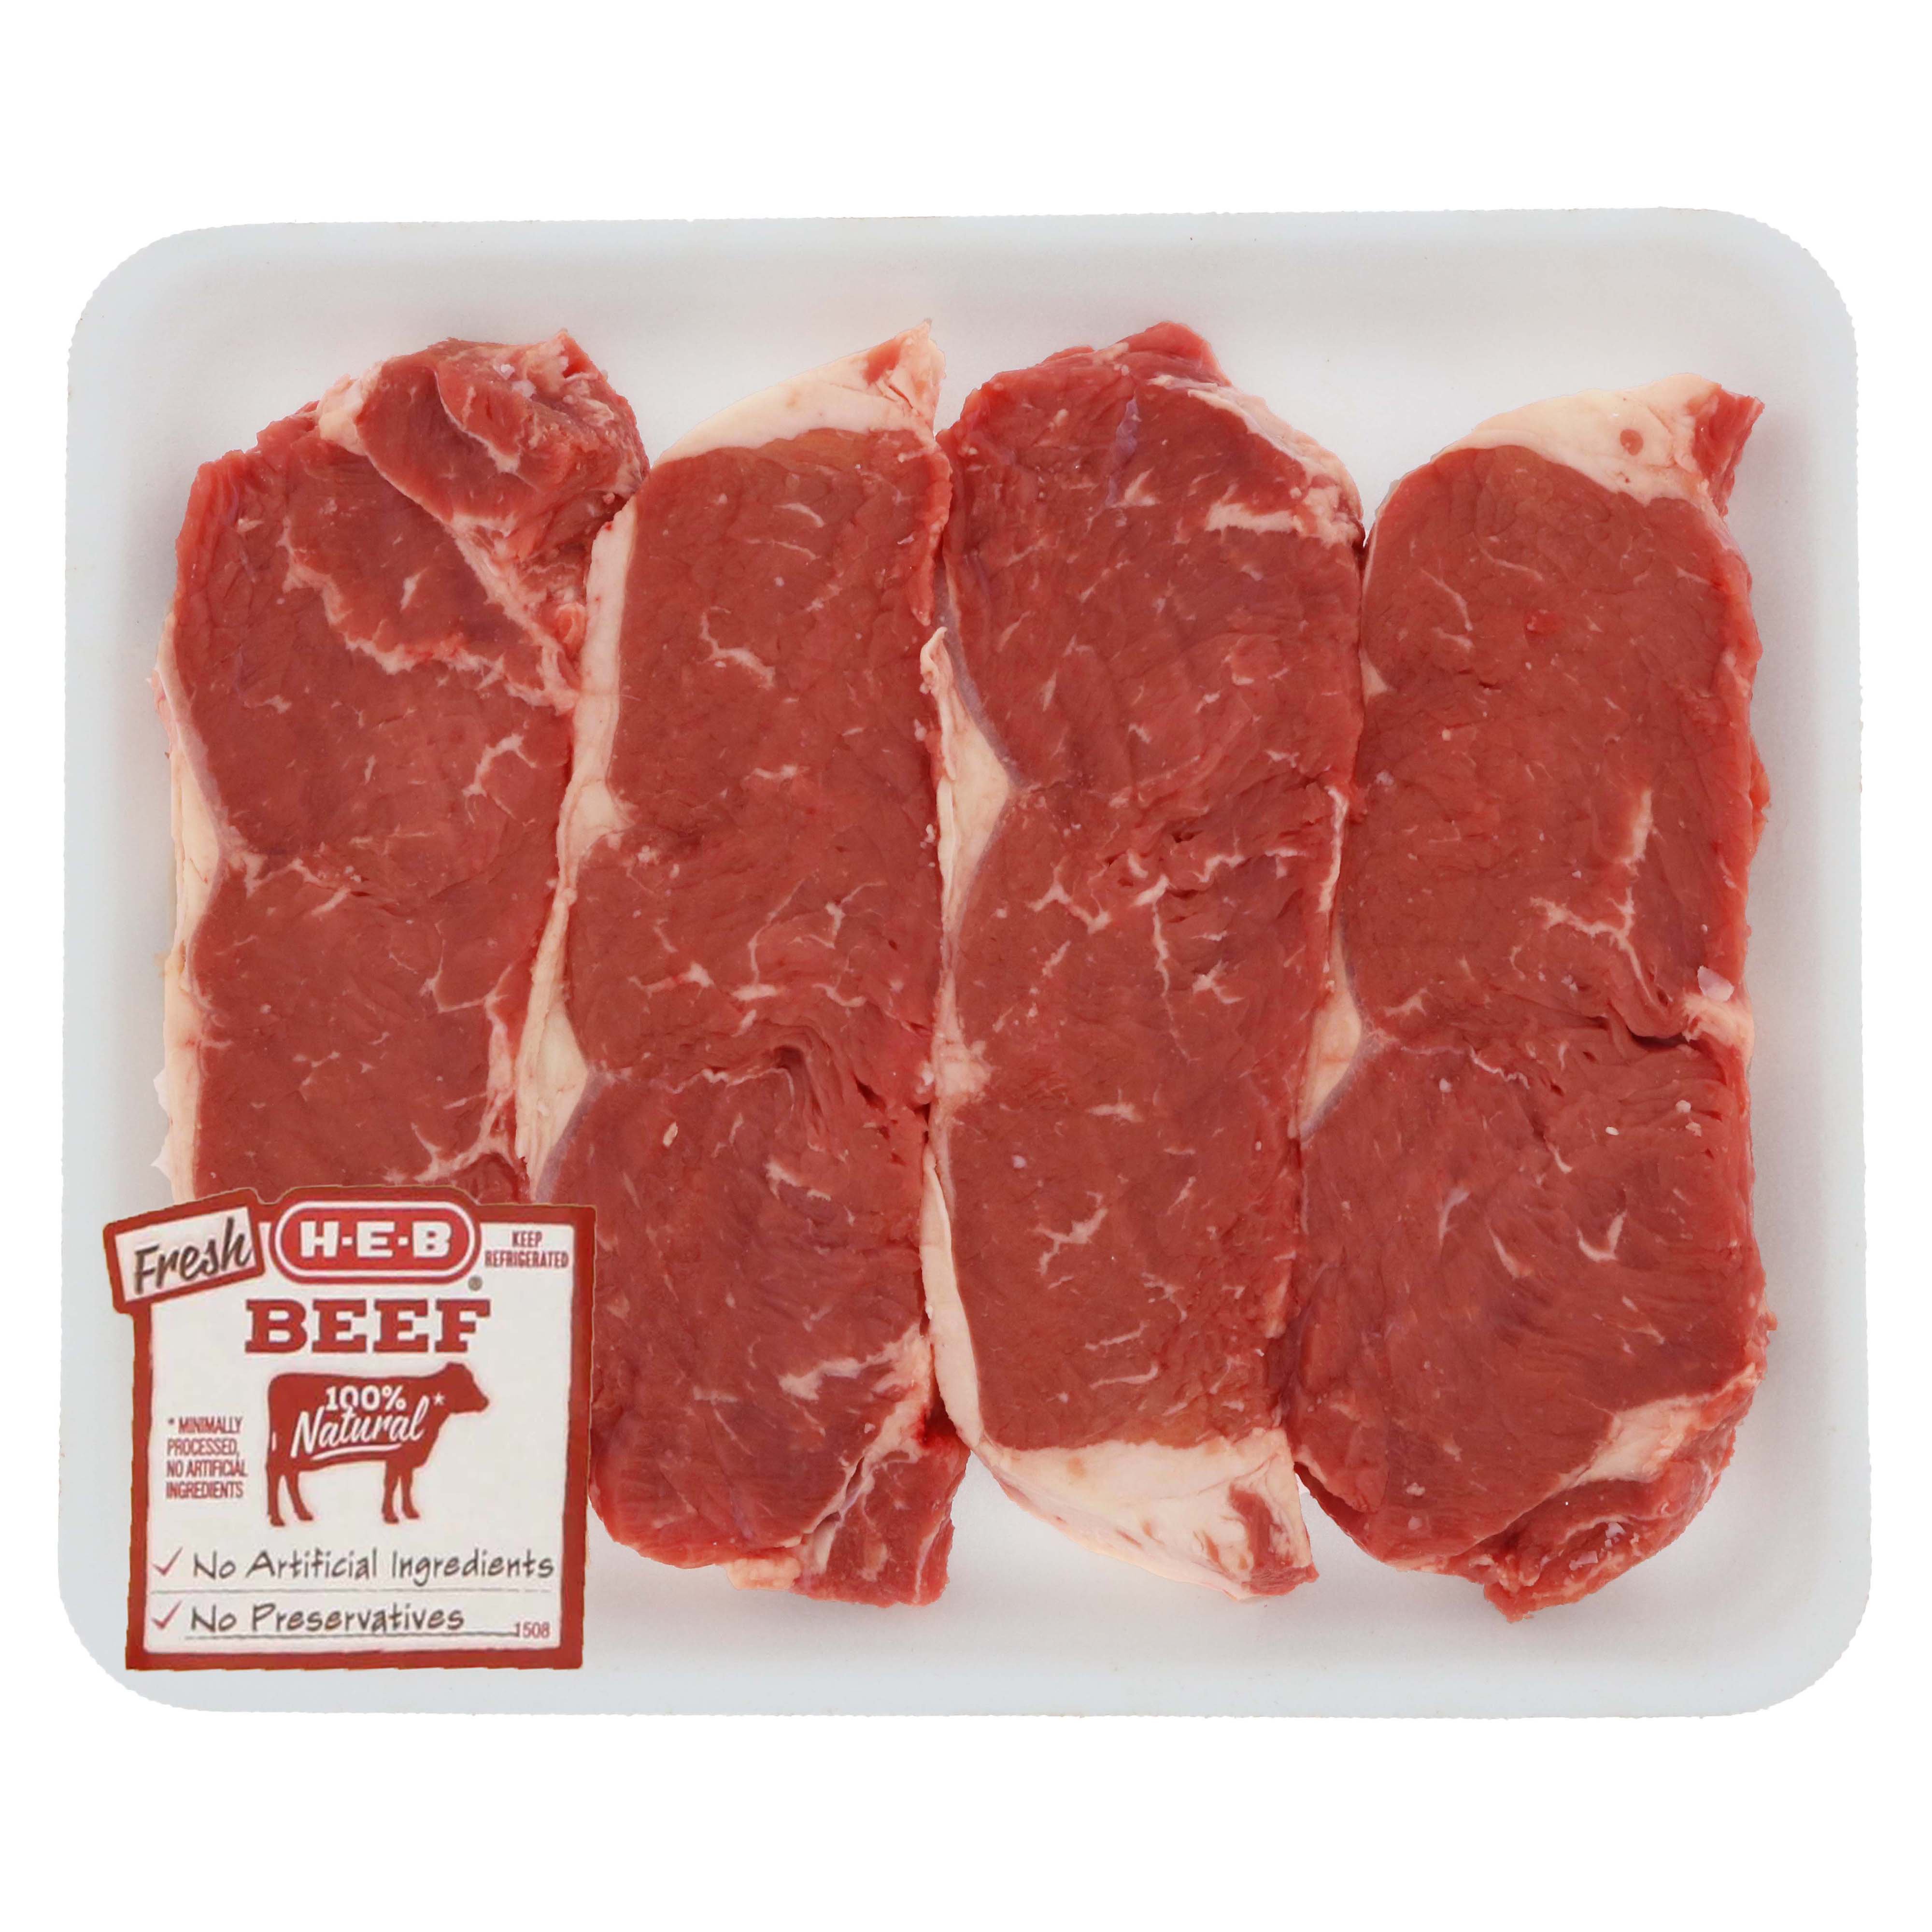 H E B Beef New York Strip Steak Boneless Value Pack Usda Select 4 5